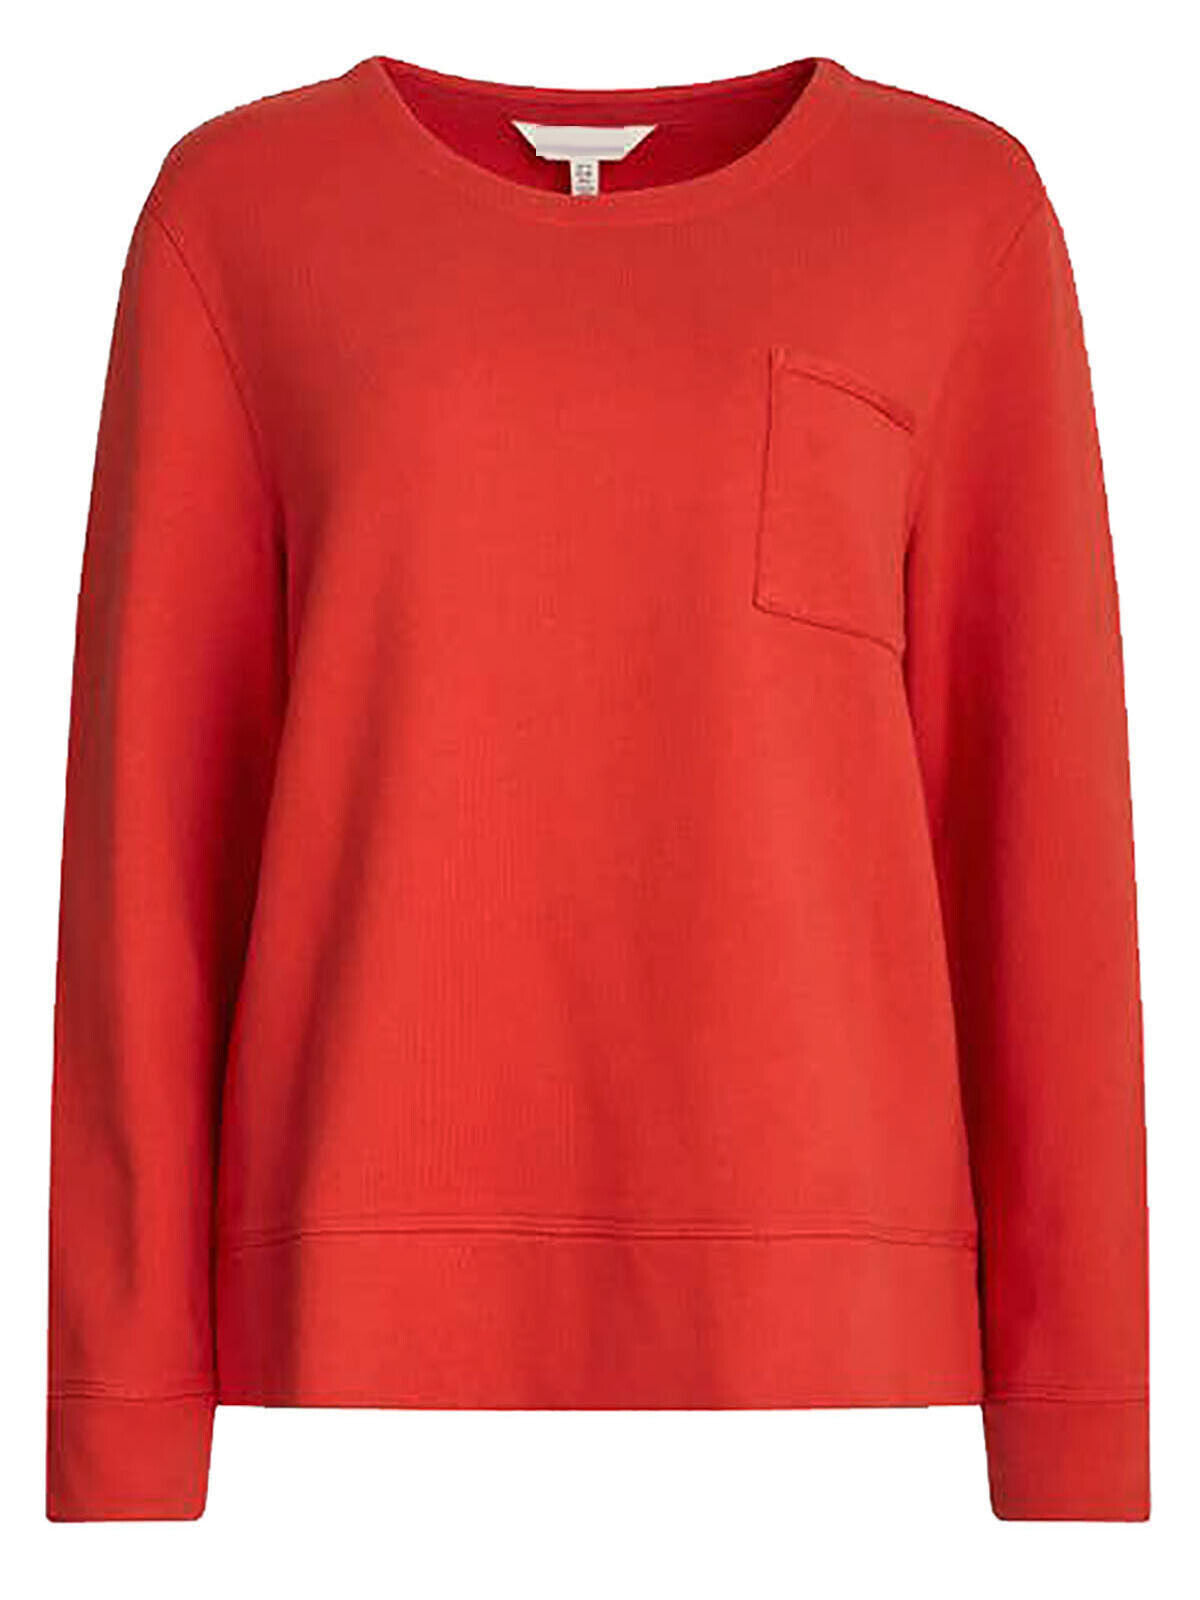 EX Seasalt Orange Autumn Sun Heart Space Sweatshirt Sizes 10, 12, 14, 18